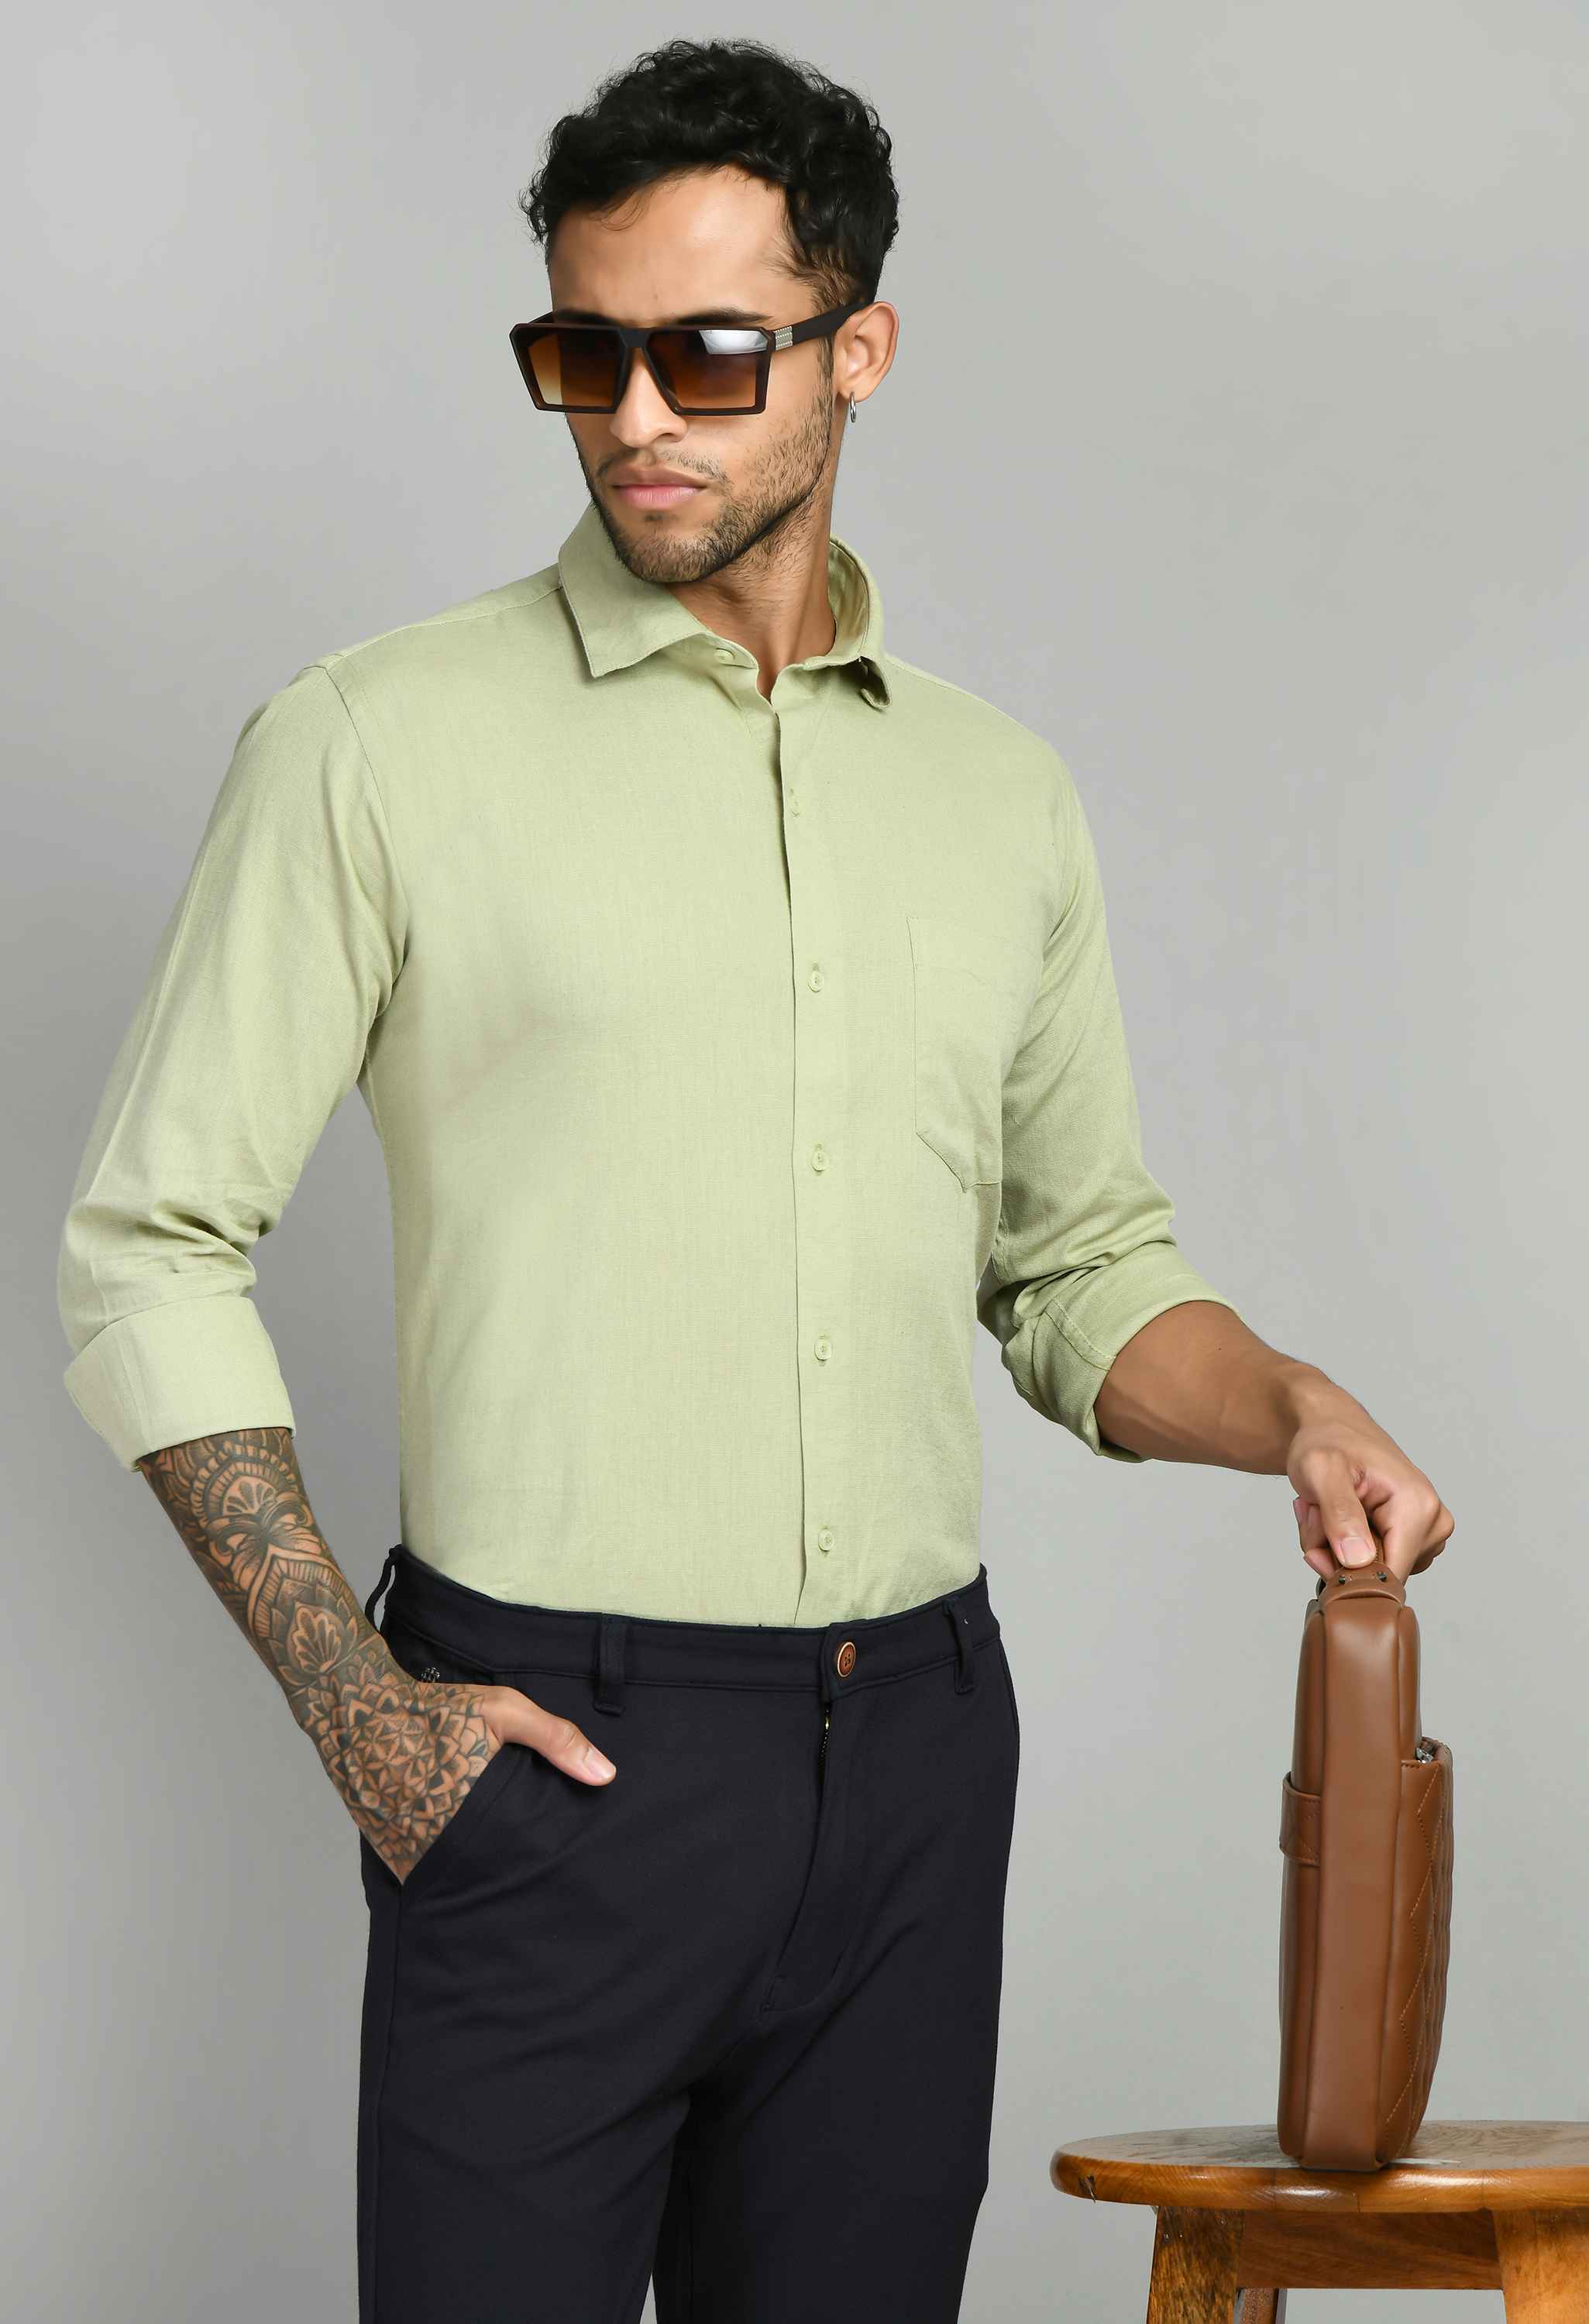 Men's Solid Cotton Oxford Slim Fit Shirt